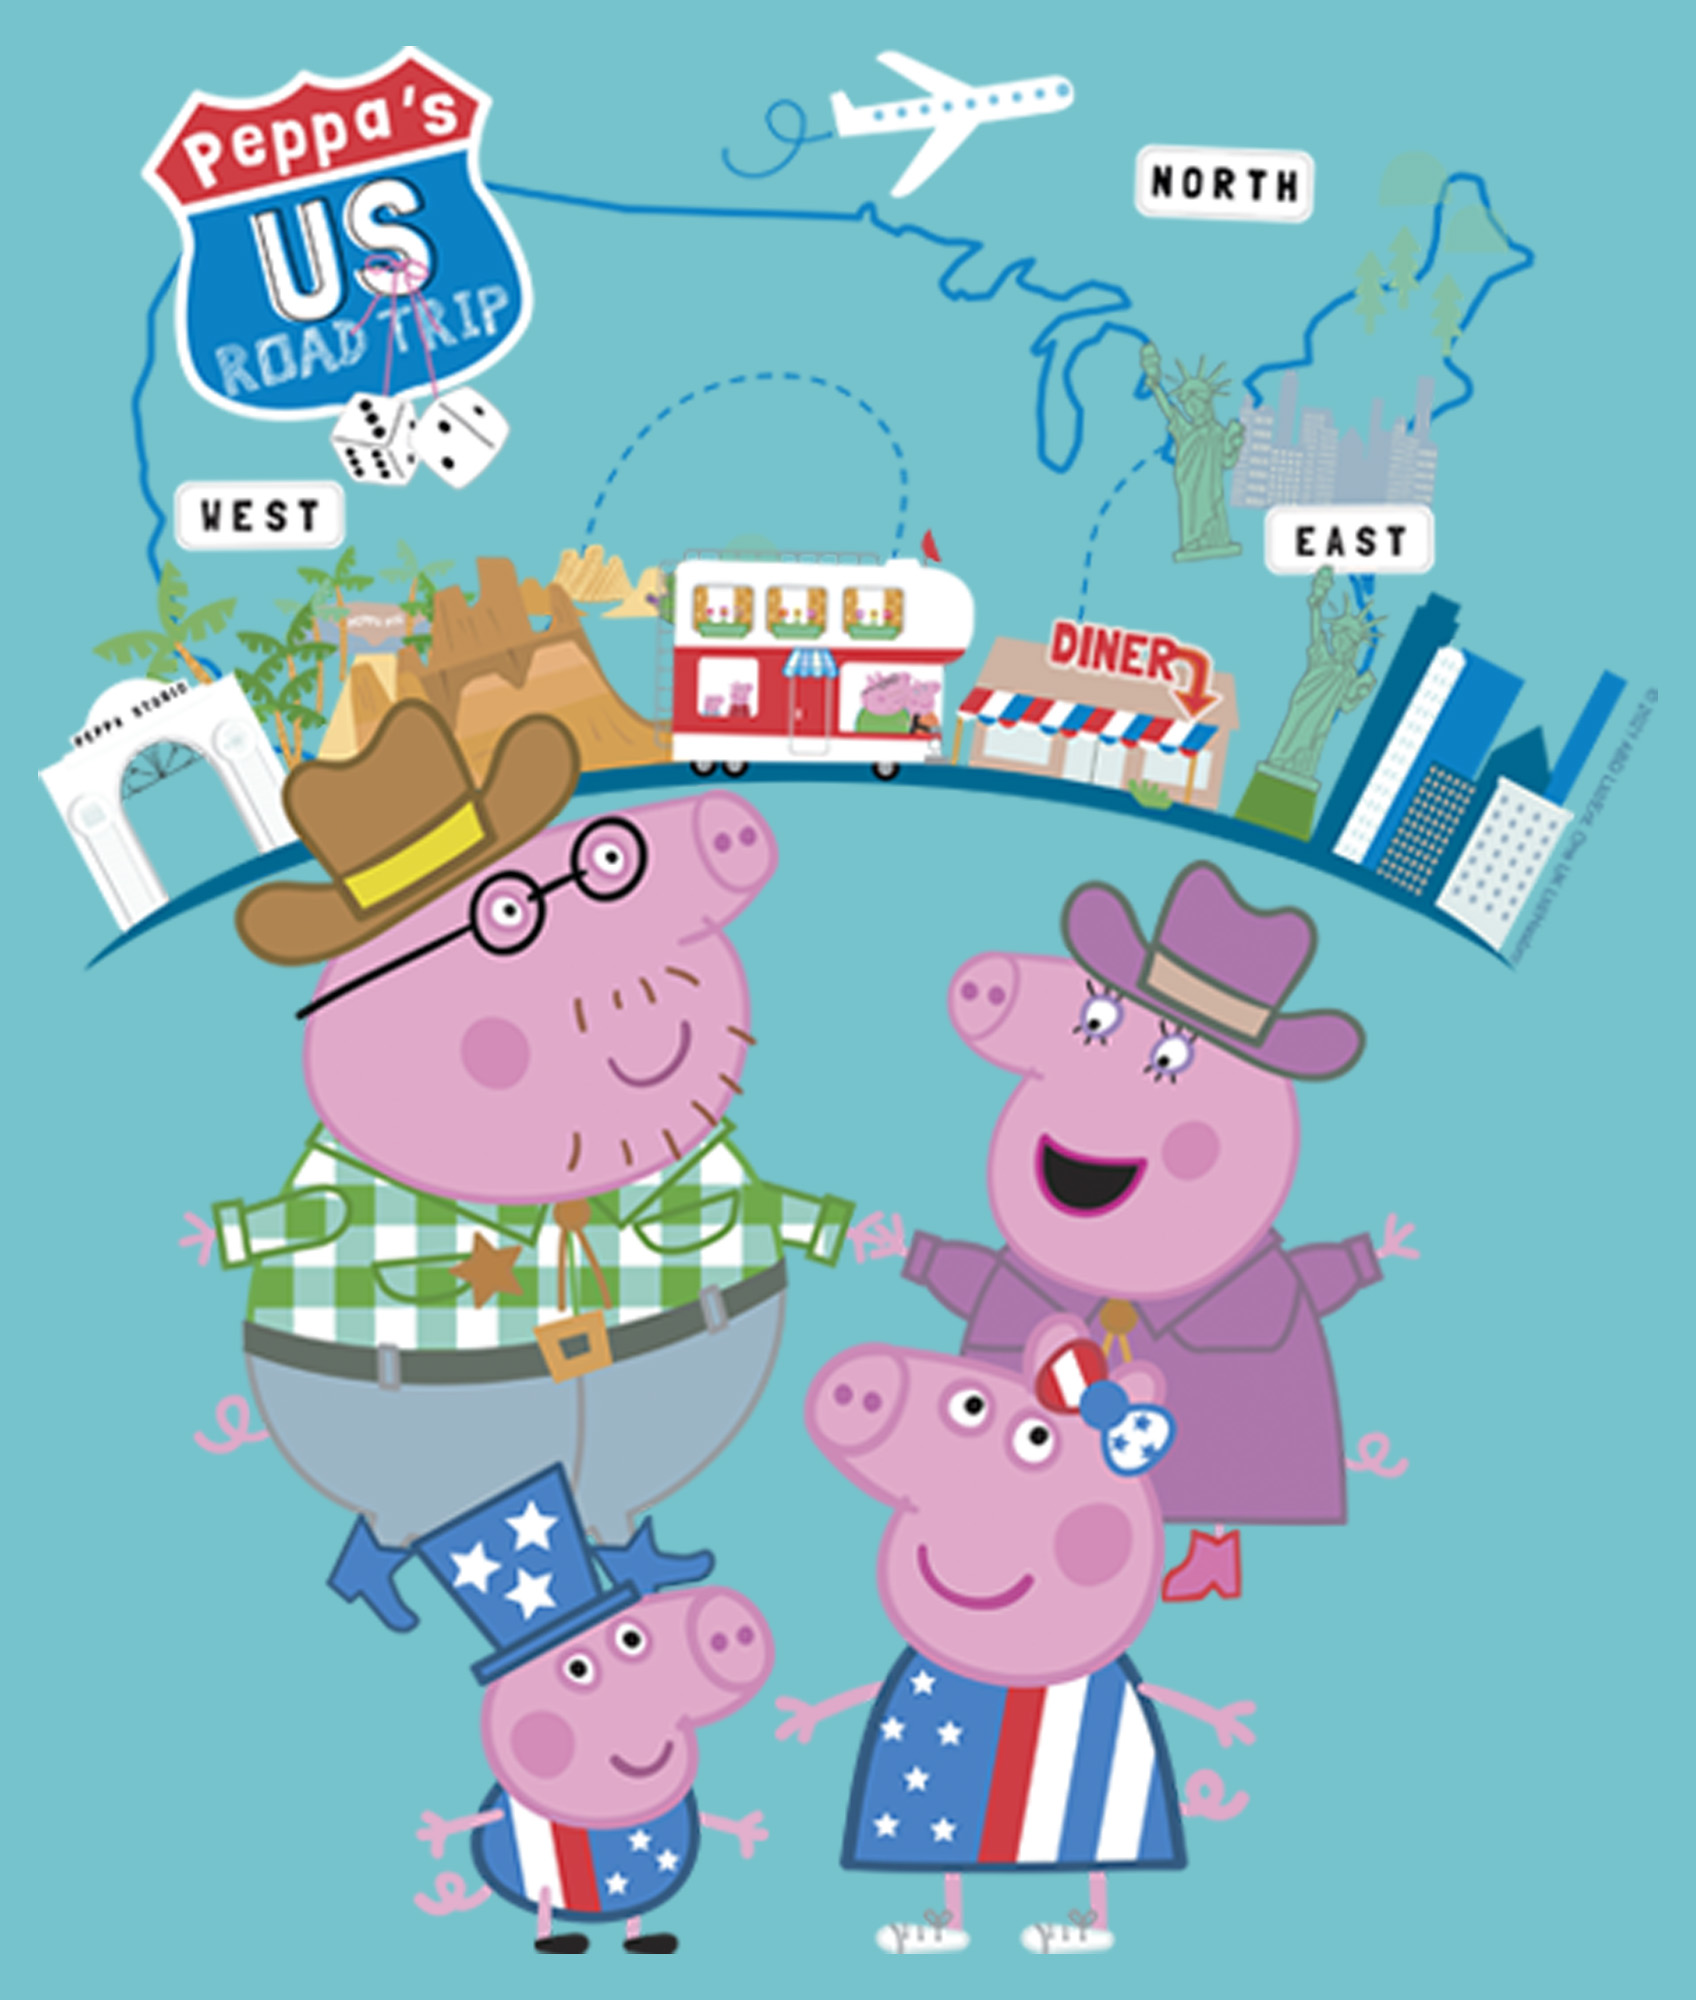 Nickelodeon Girl's Peppa Pig Family Road Trip  Graphic T-Shirt